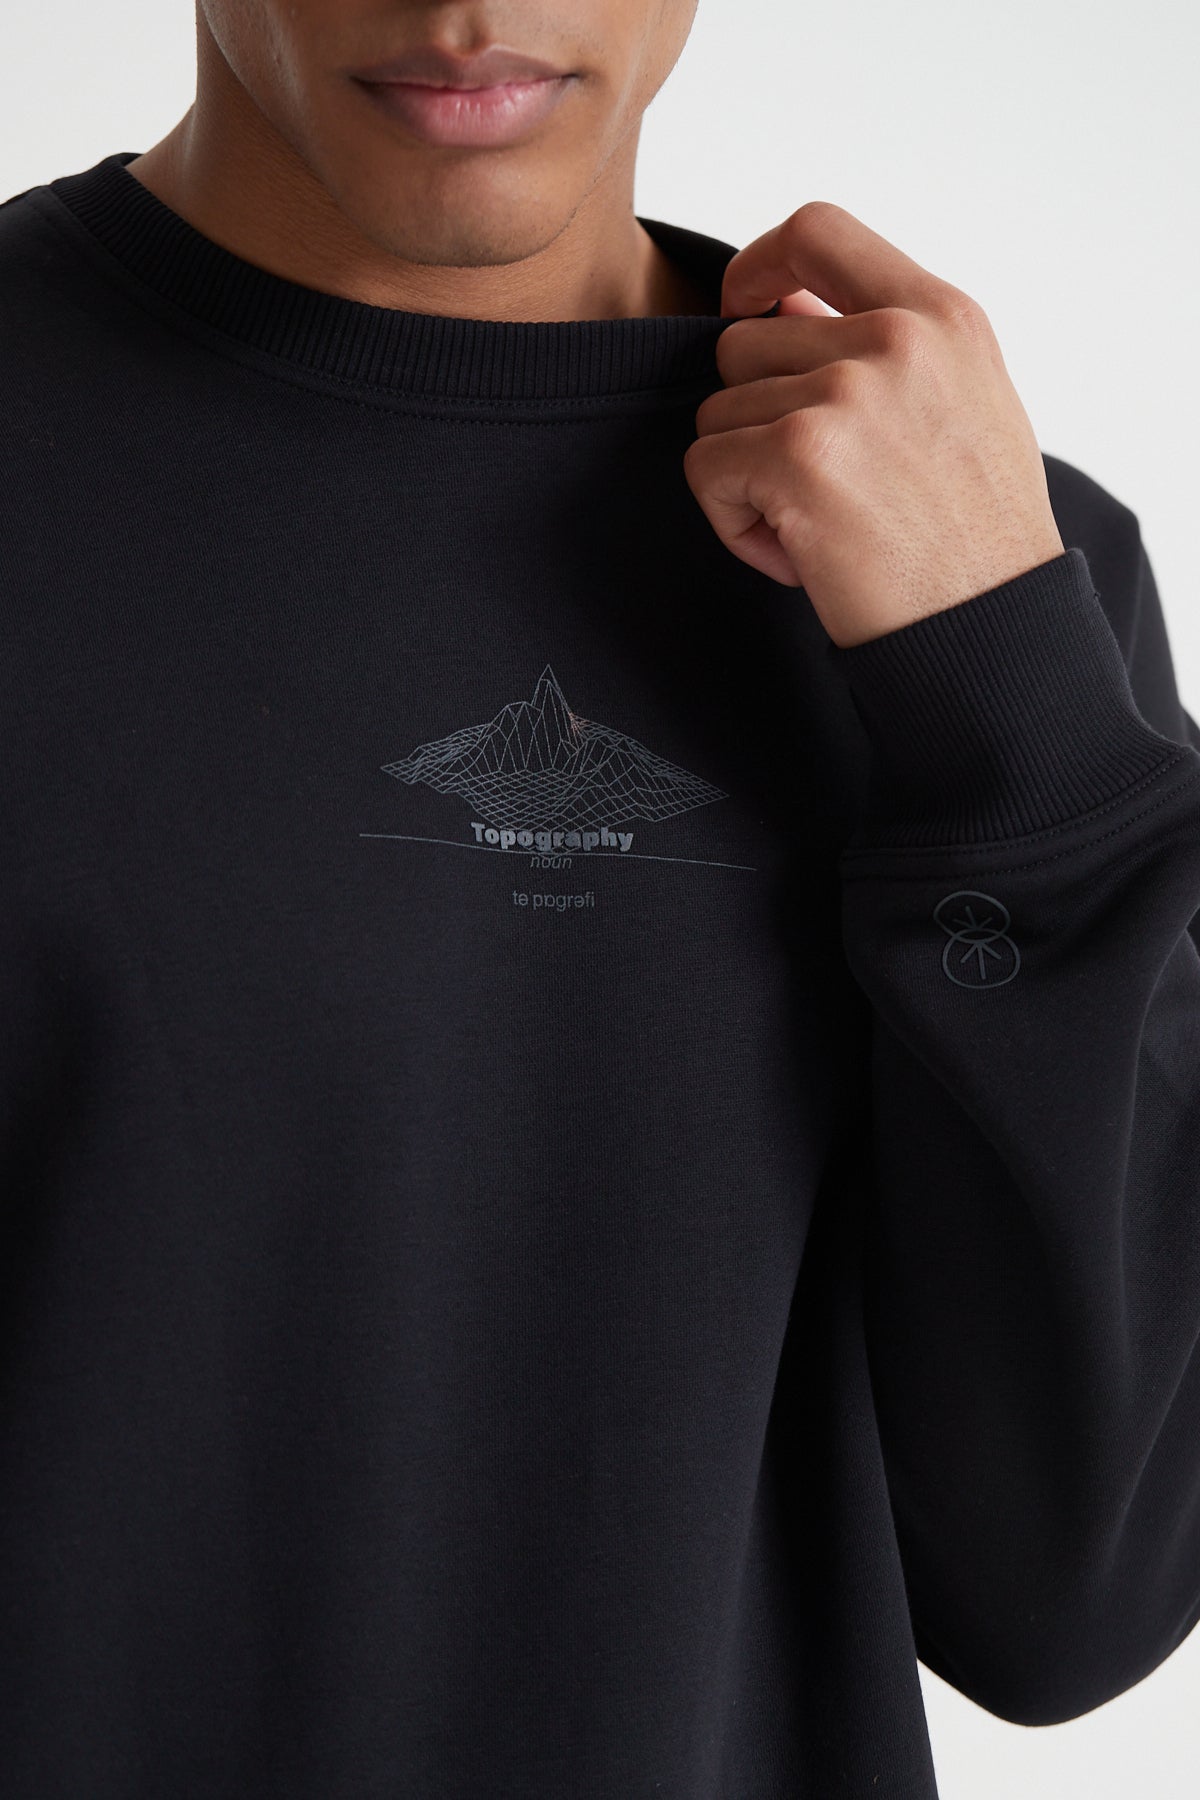 Topography Sweatshirt - Jet Black